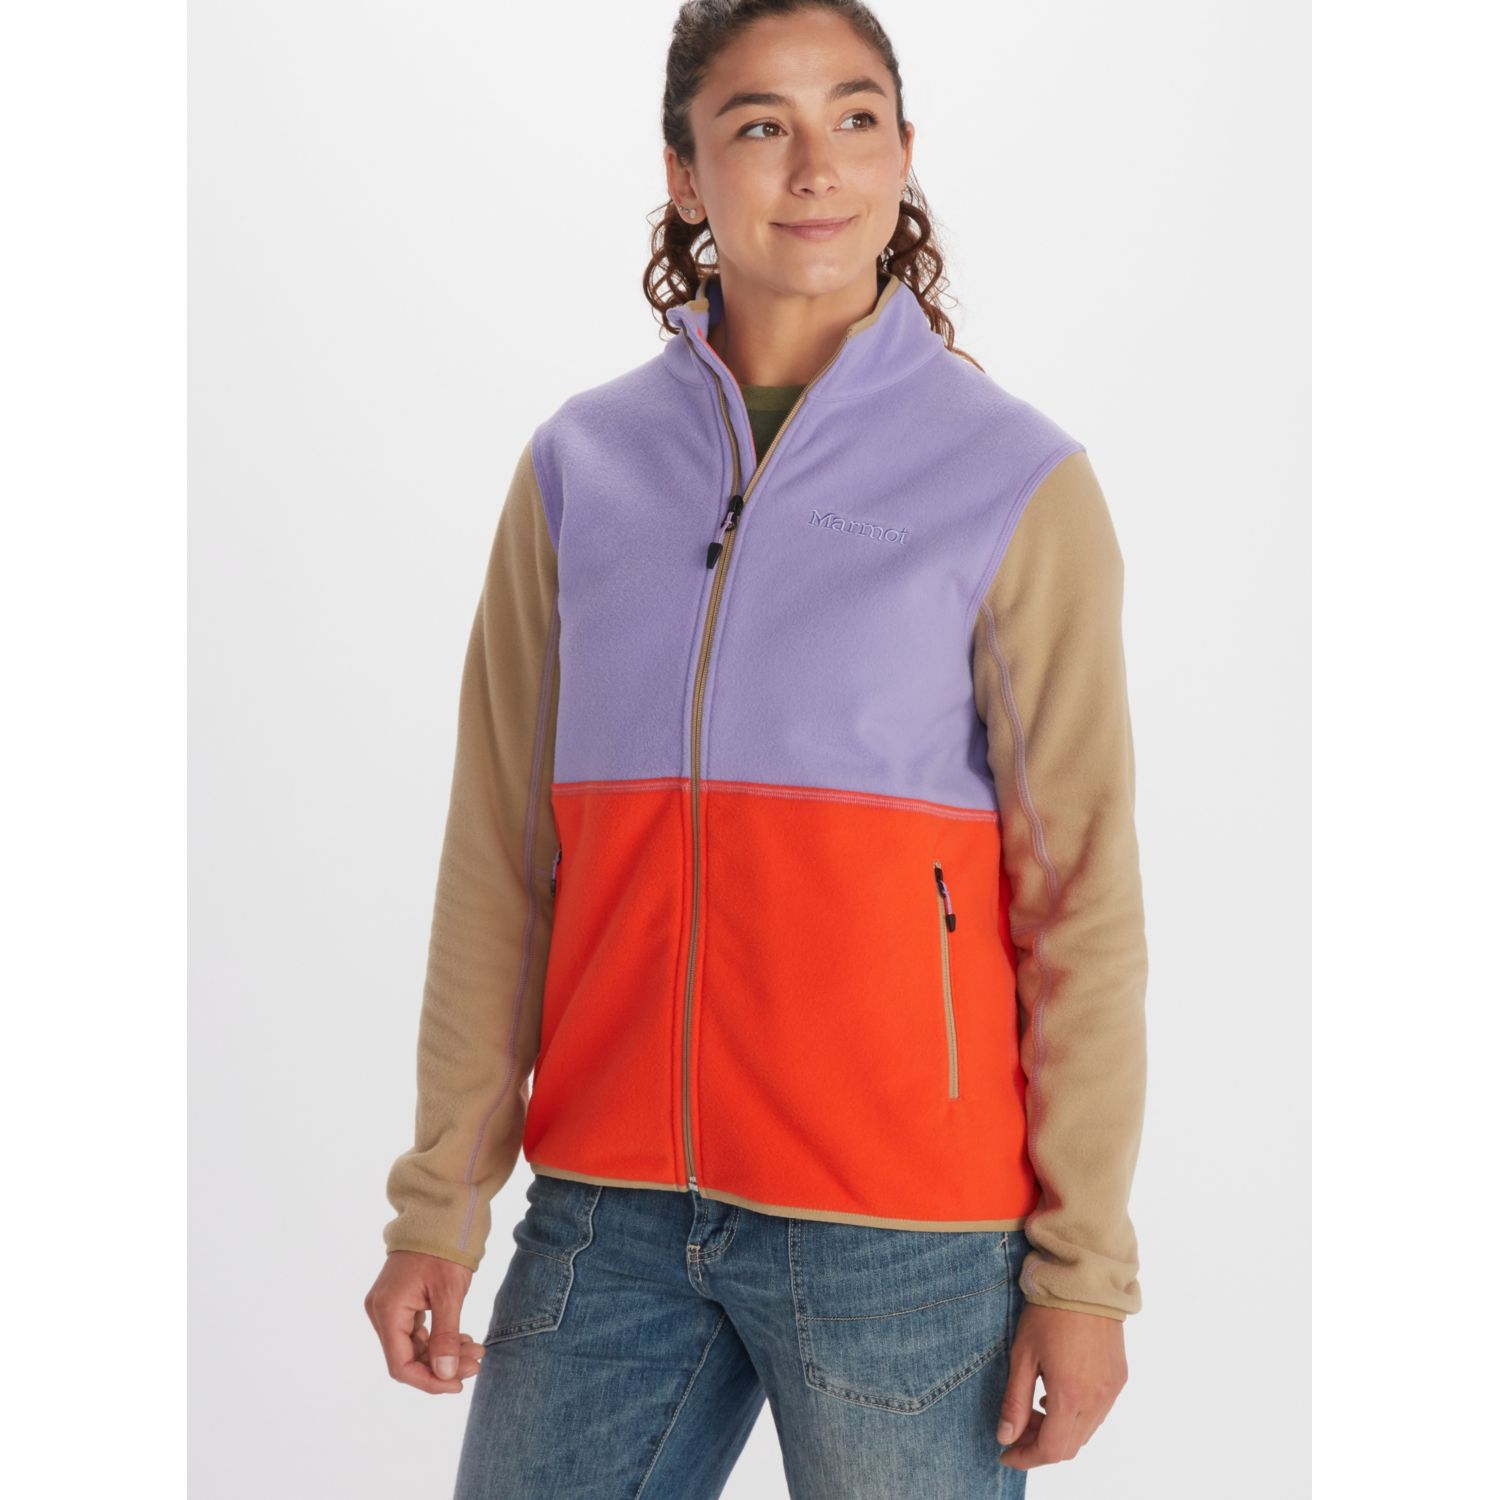 Marmot Women's Rocklin Full-Zip Fleece Jacket (Paisley Purple/Red Sun/Shetland, Size XS-XL) $23.97 + Free Shipping